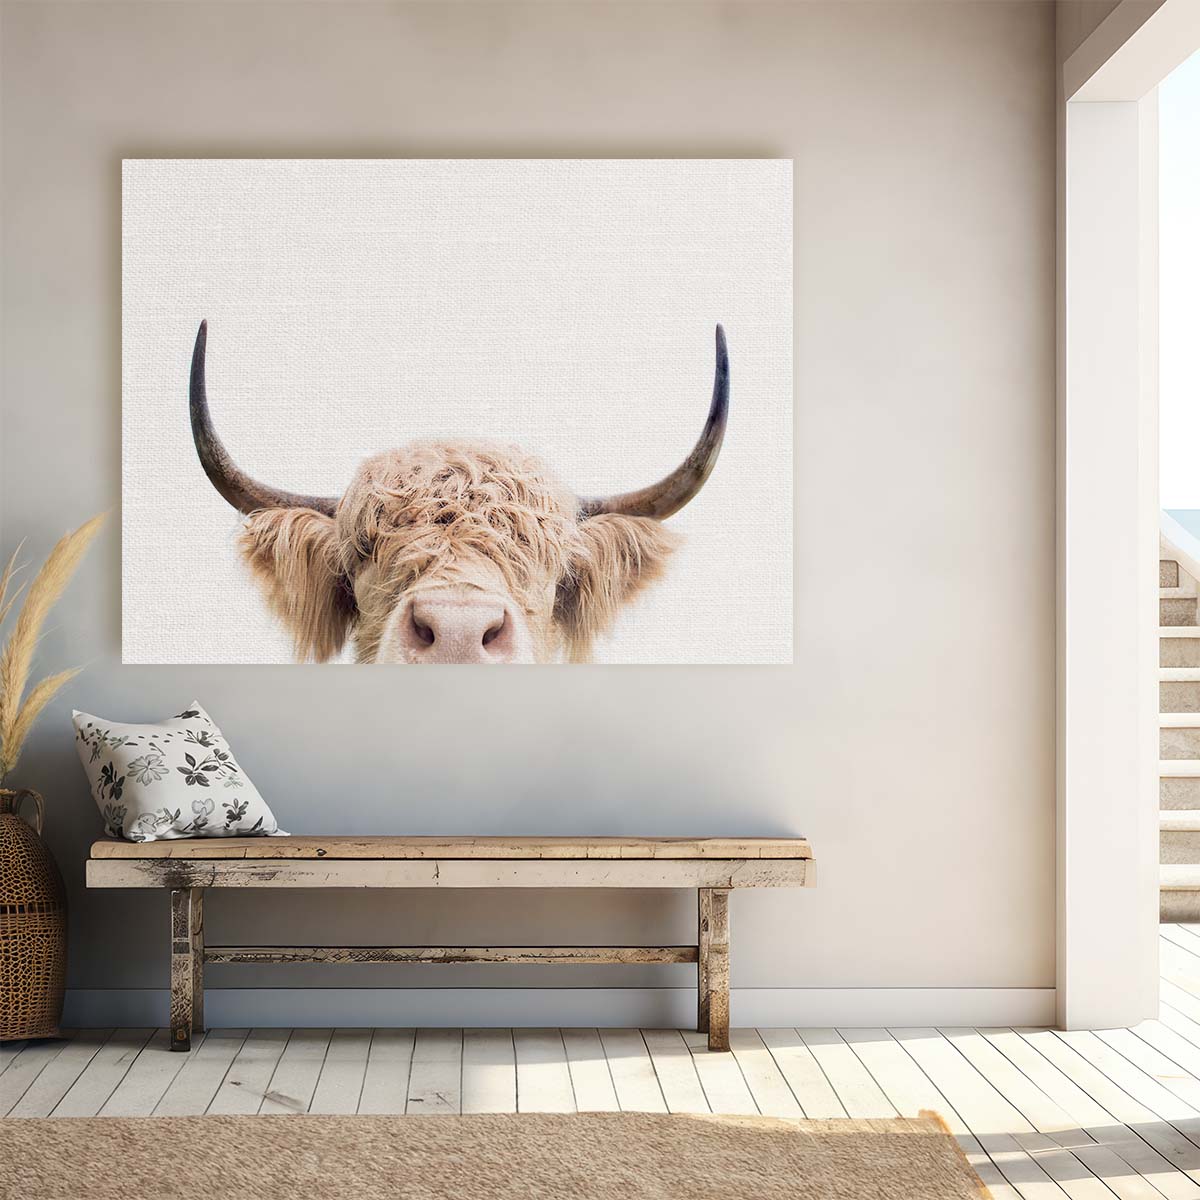 Highland Cow Close-Up Portrait - Rural Farm Photography Wall Art